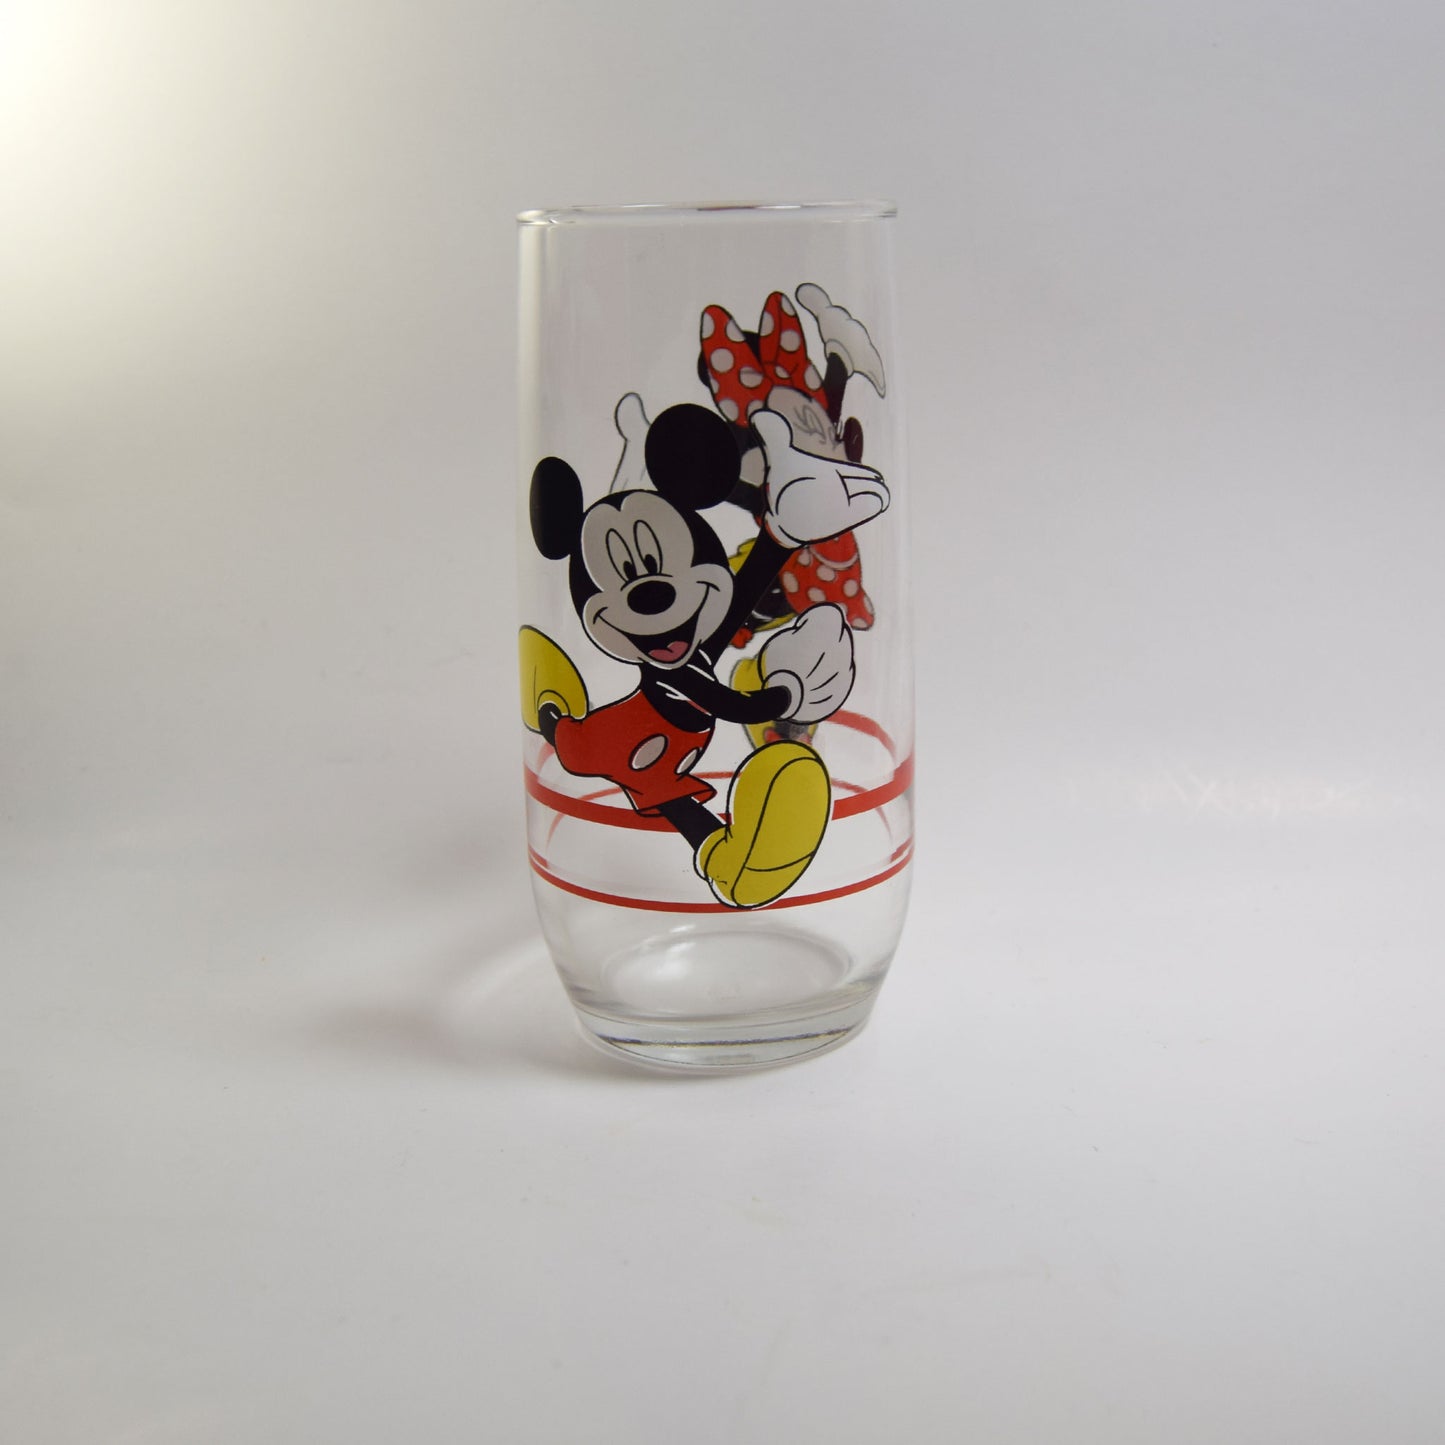 Vintage Disney Drinking Glass